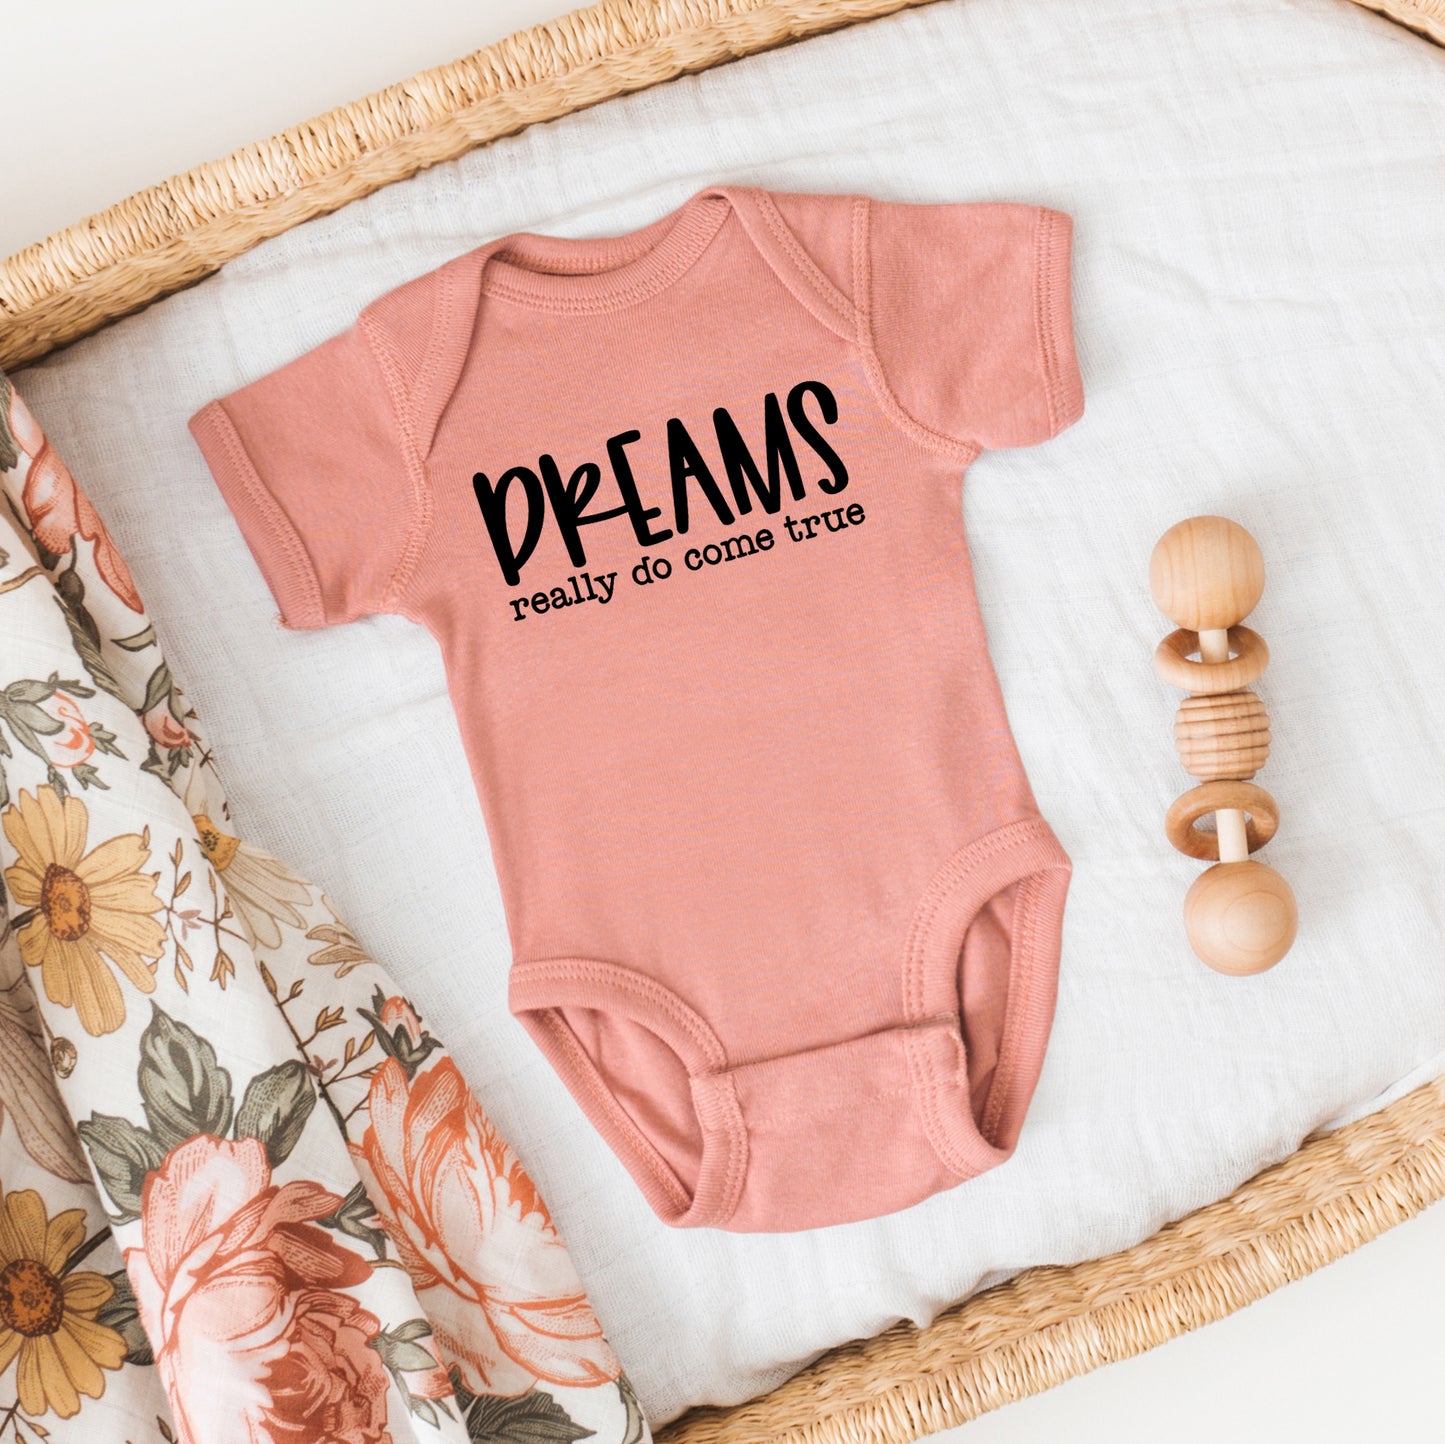 Dreams Really Do Come True | Baby Graphic Short Sleeve Onesie